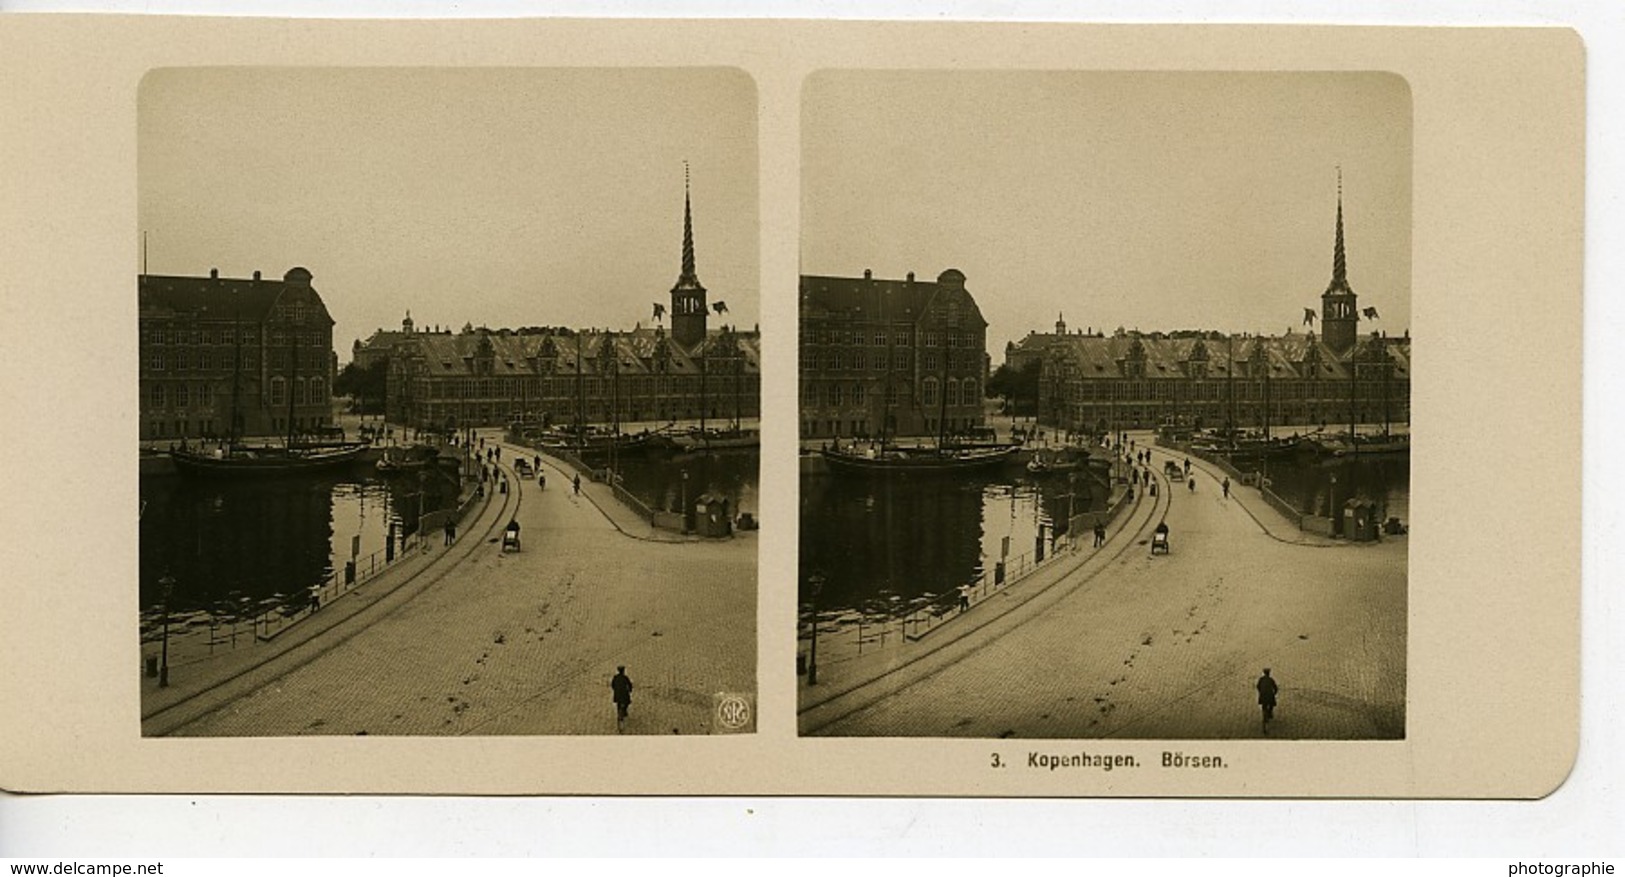 Danemark Copenhague Borsen Bourse Ancienne Photo Stereo NPG 1900 - Stereoscopic